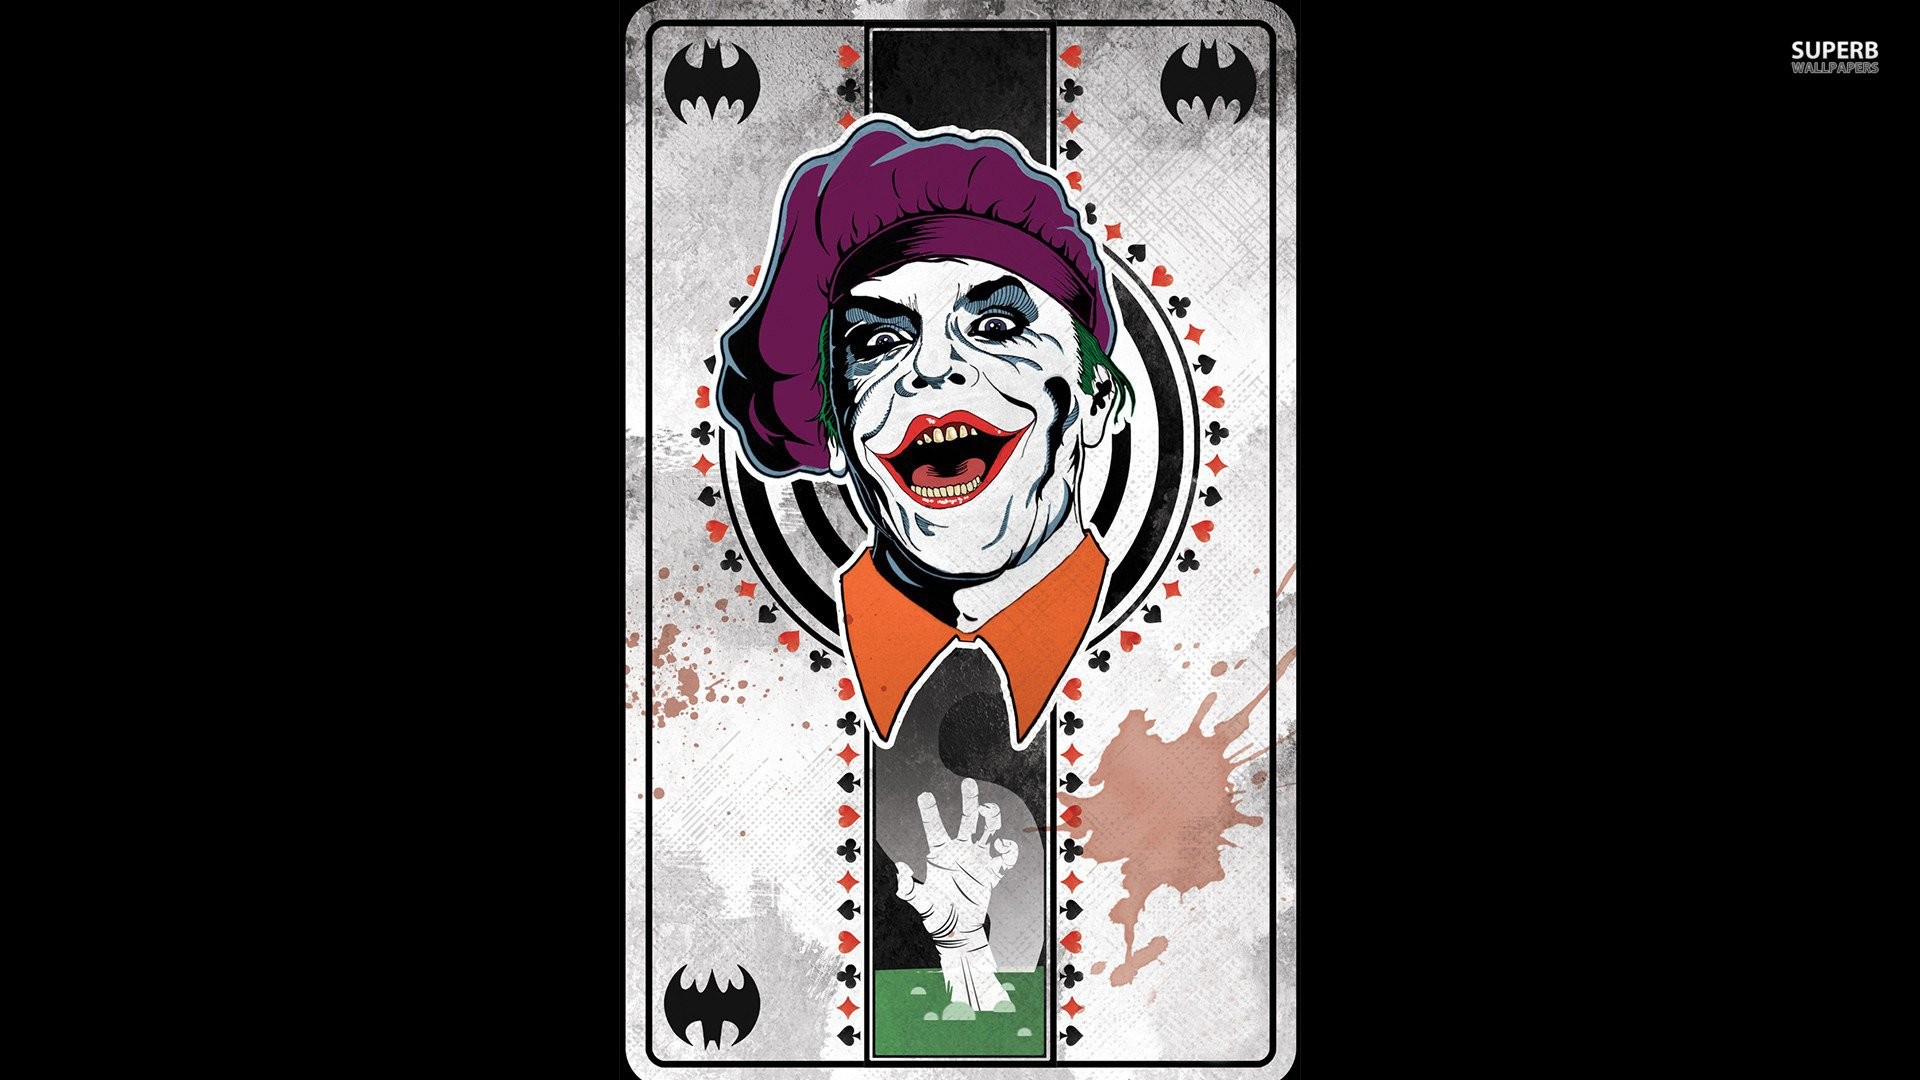 1920x1080 Image Gallery: joker card wallpaper